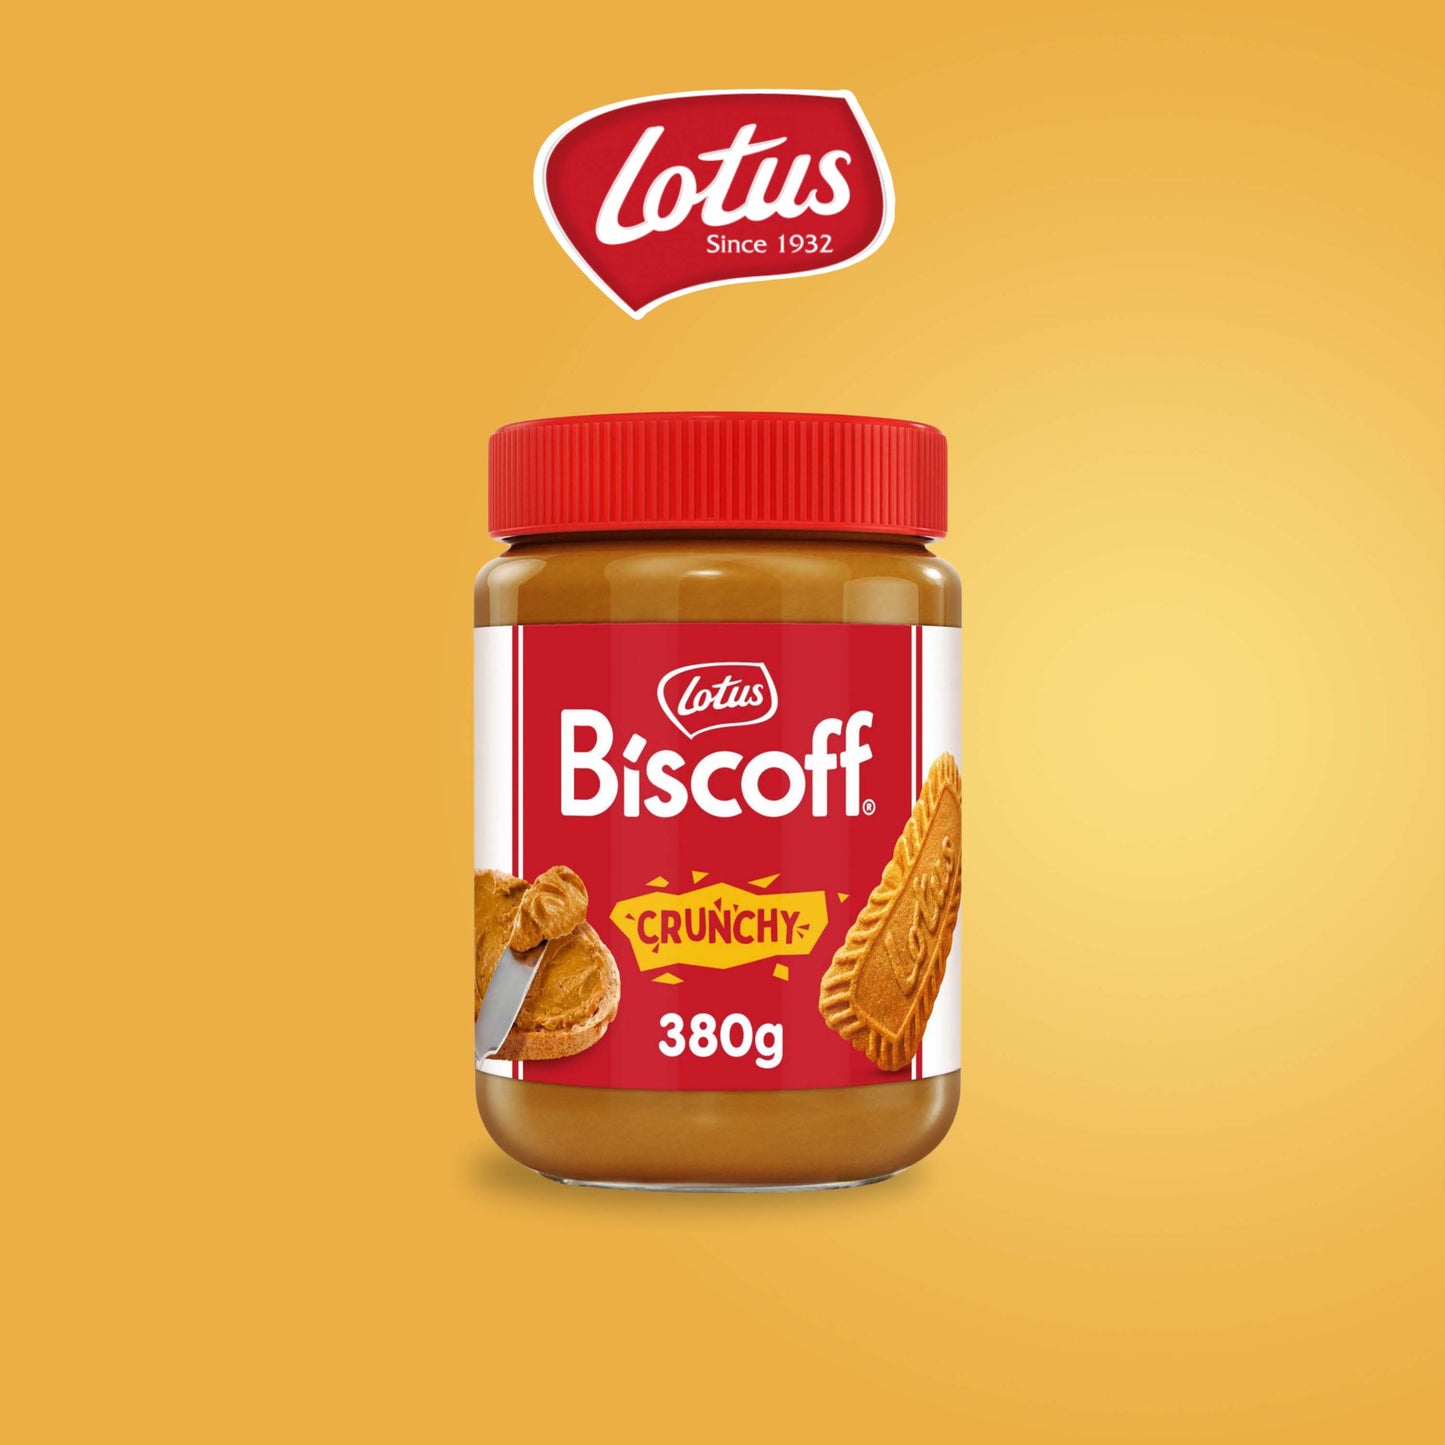 Lotus Biscoff Biscuit Crunchy Spread - 380g - BRITISH CLASSIC SNACKS